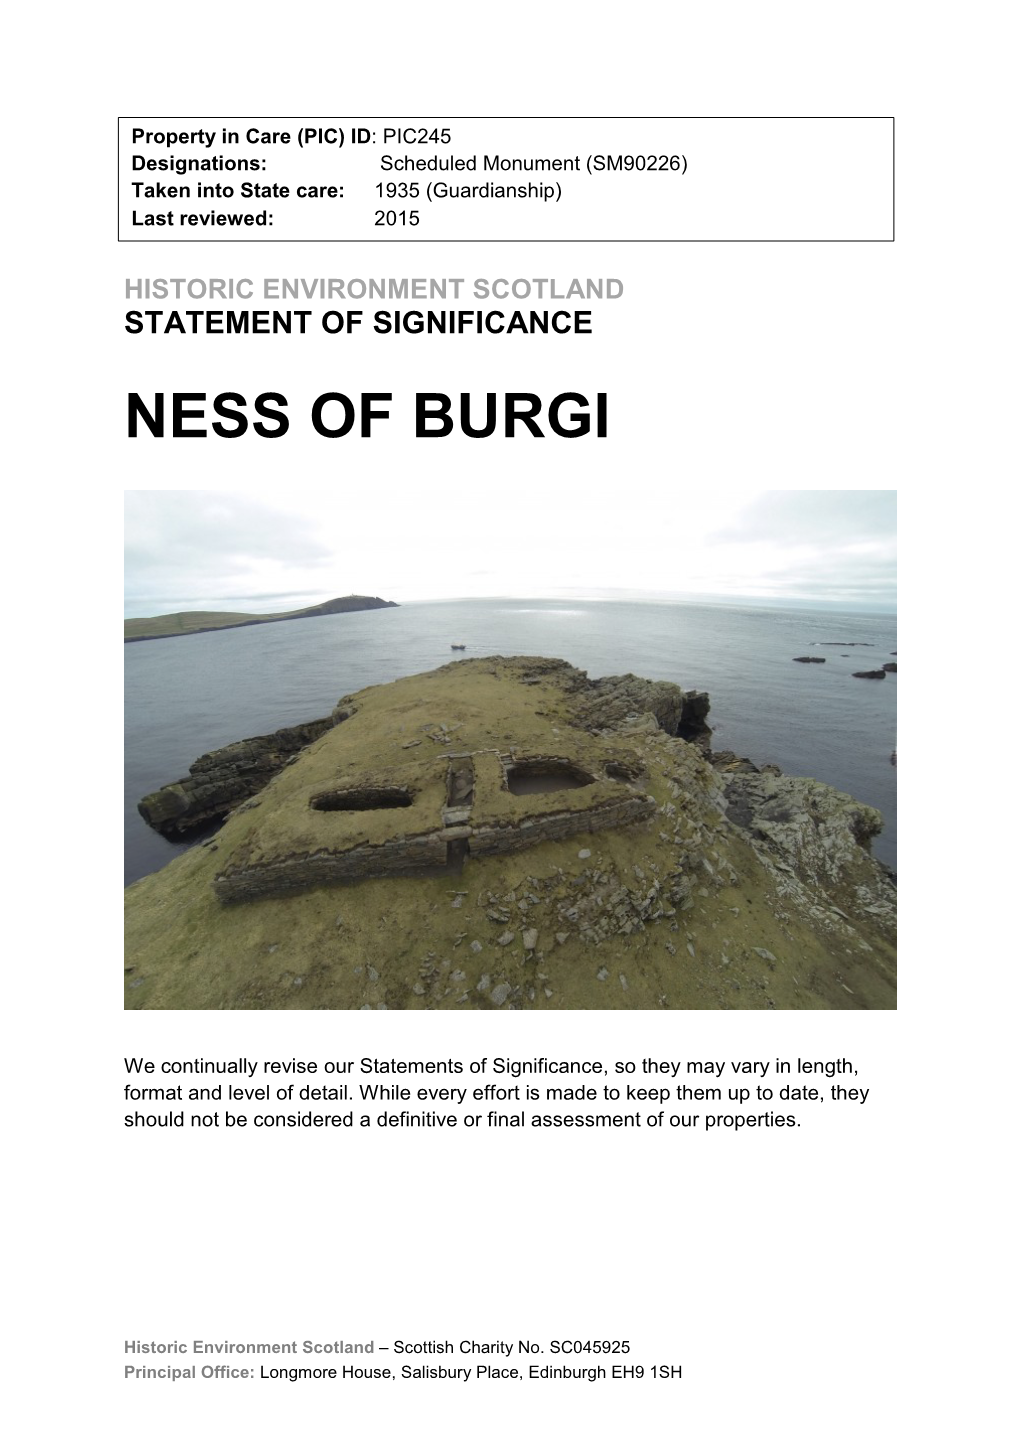 Ness of Burgi